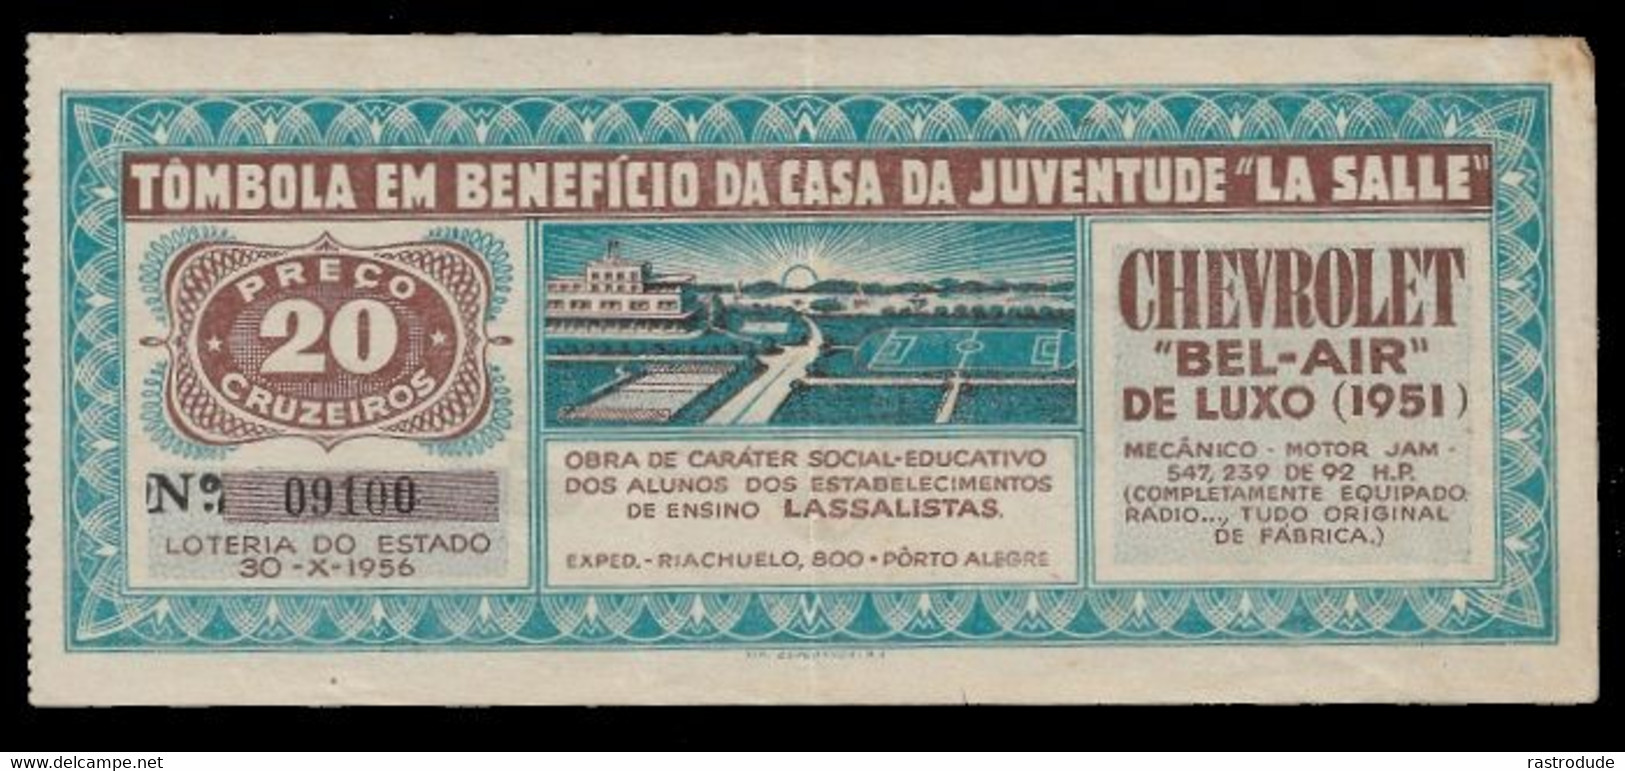 1956 BRASIL BRAZIL - LOTTERY TICKET TOMBOLA EM BENEFICIO DA CASA JUVENTUDE LA SALLE - Lottery Tickets